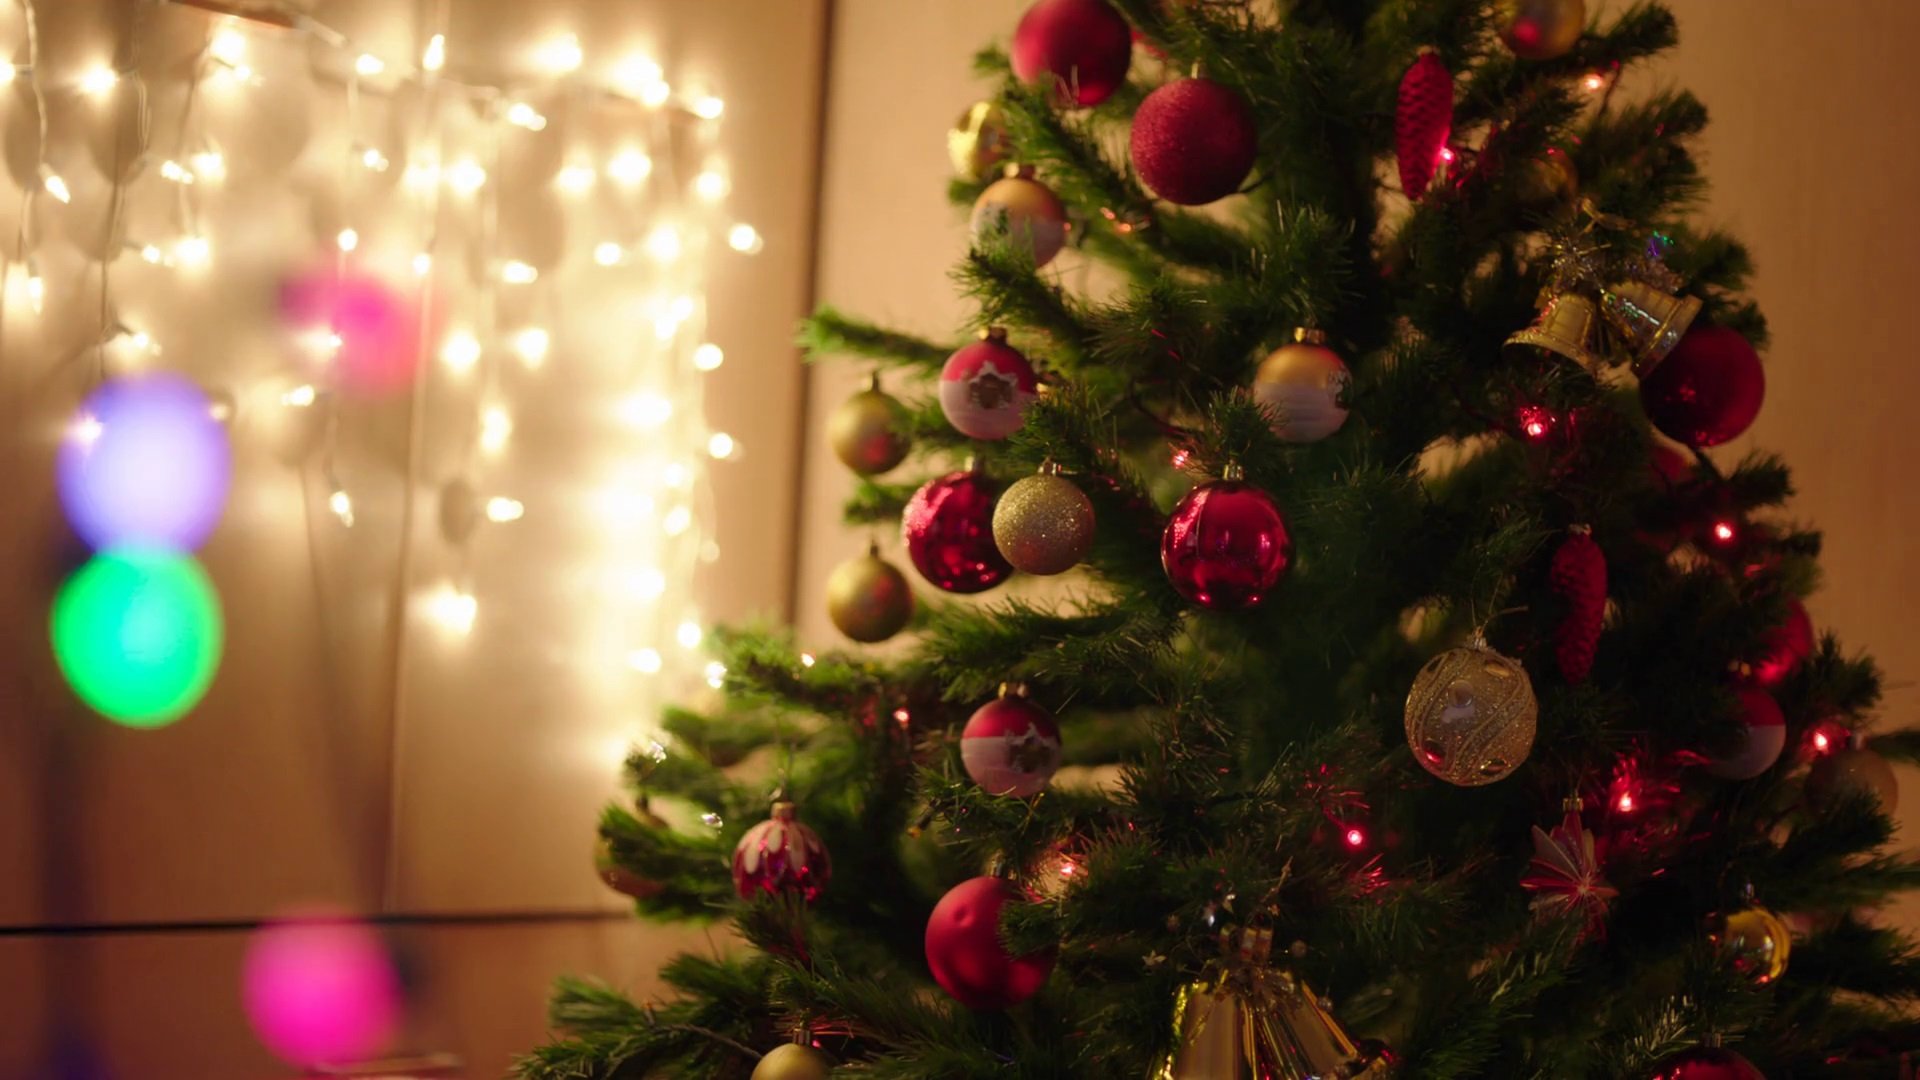 More information about "Θεσσαλονίκη: Πιλοτική εφαρμογή της δράσης «Κανένα Χριστουγεννιάτικο Δέντρο σε ΧΥΤΑ»"